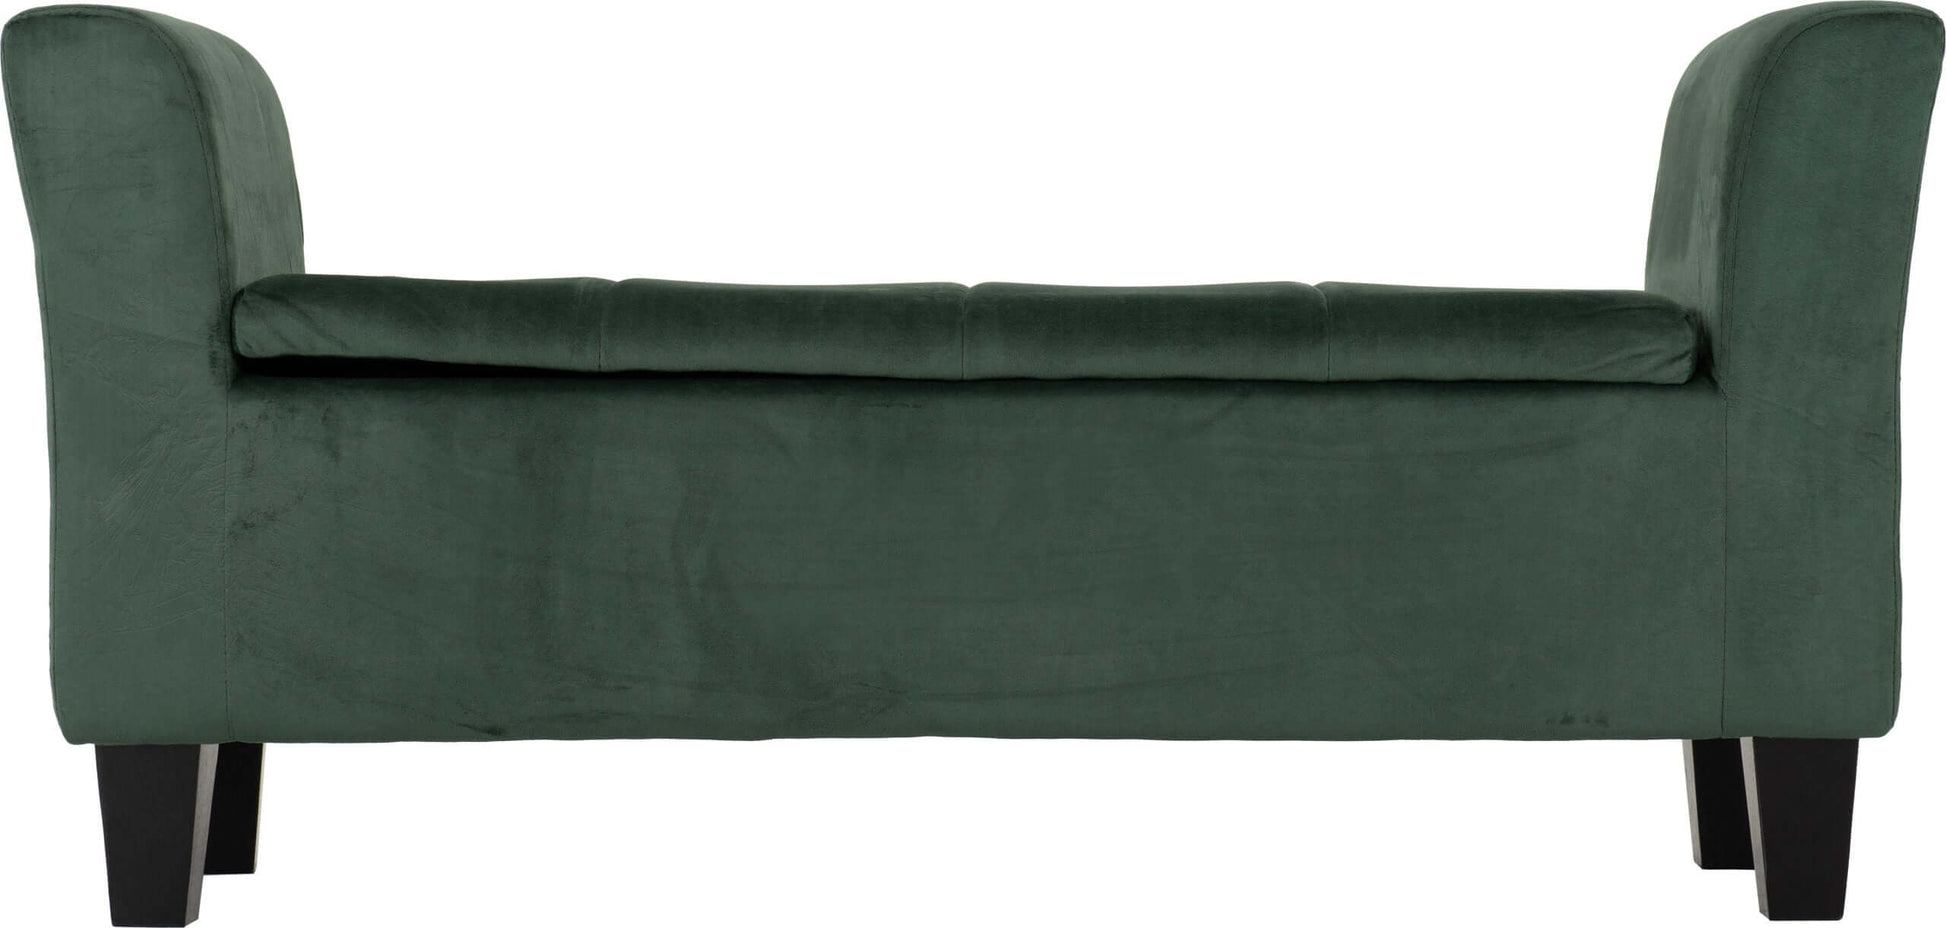 Amelia Storage Ottoman Green Velvet Fabric- The Right Buy Store